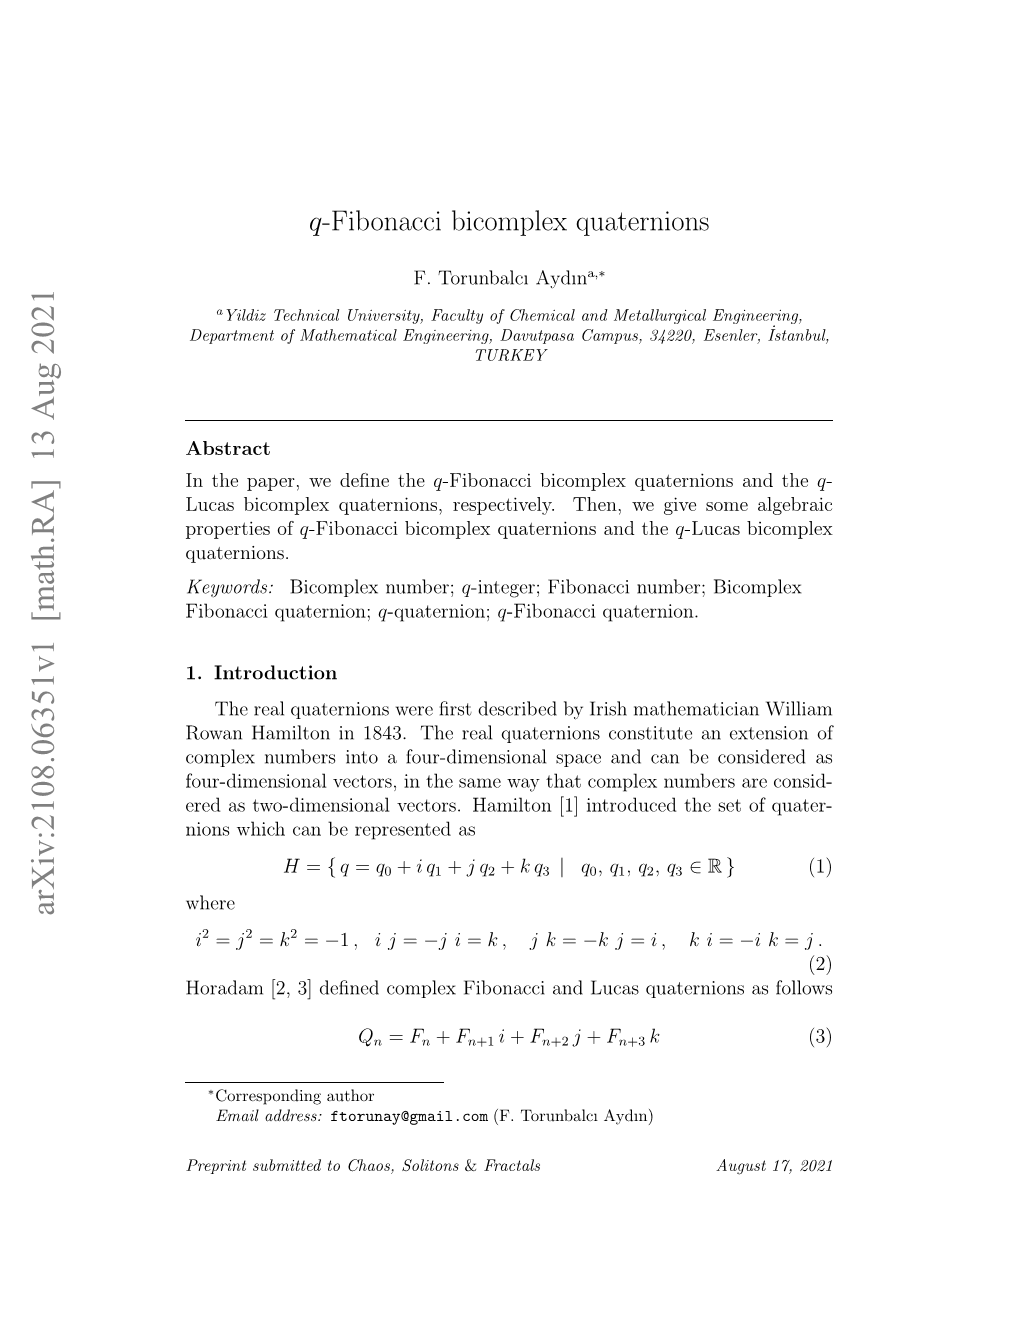 Q-Fibonacci Bicomplex Quaternions